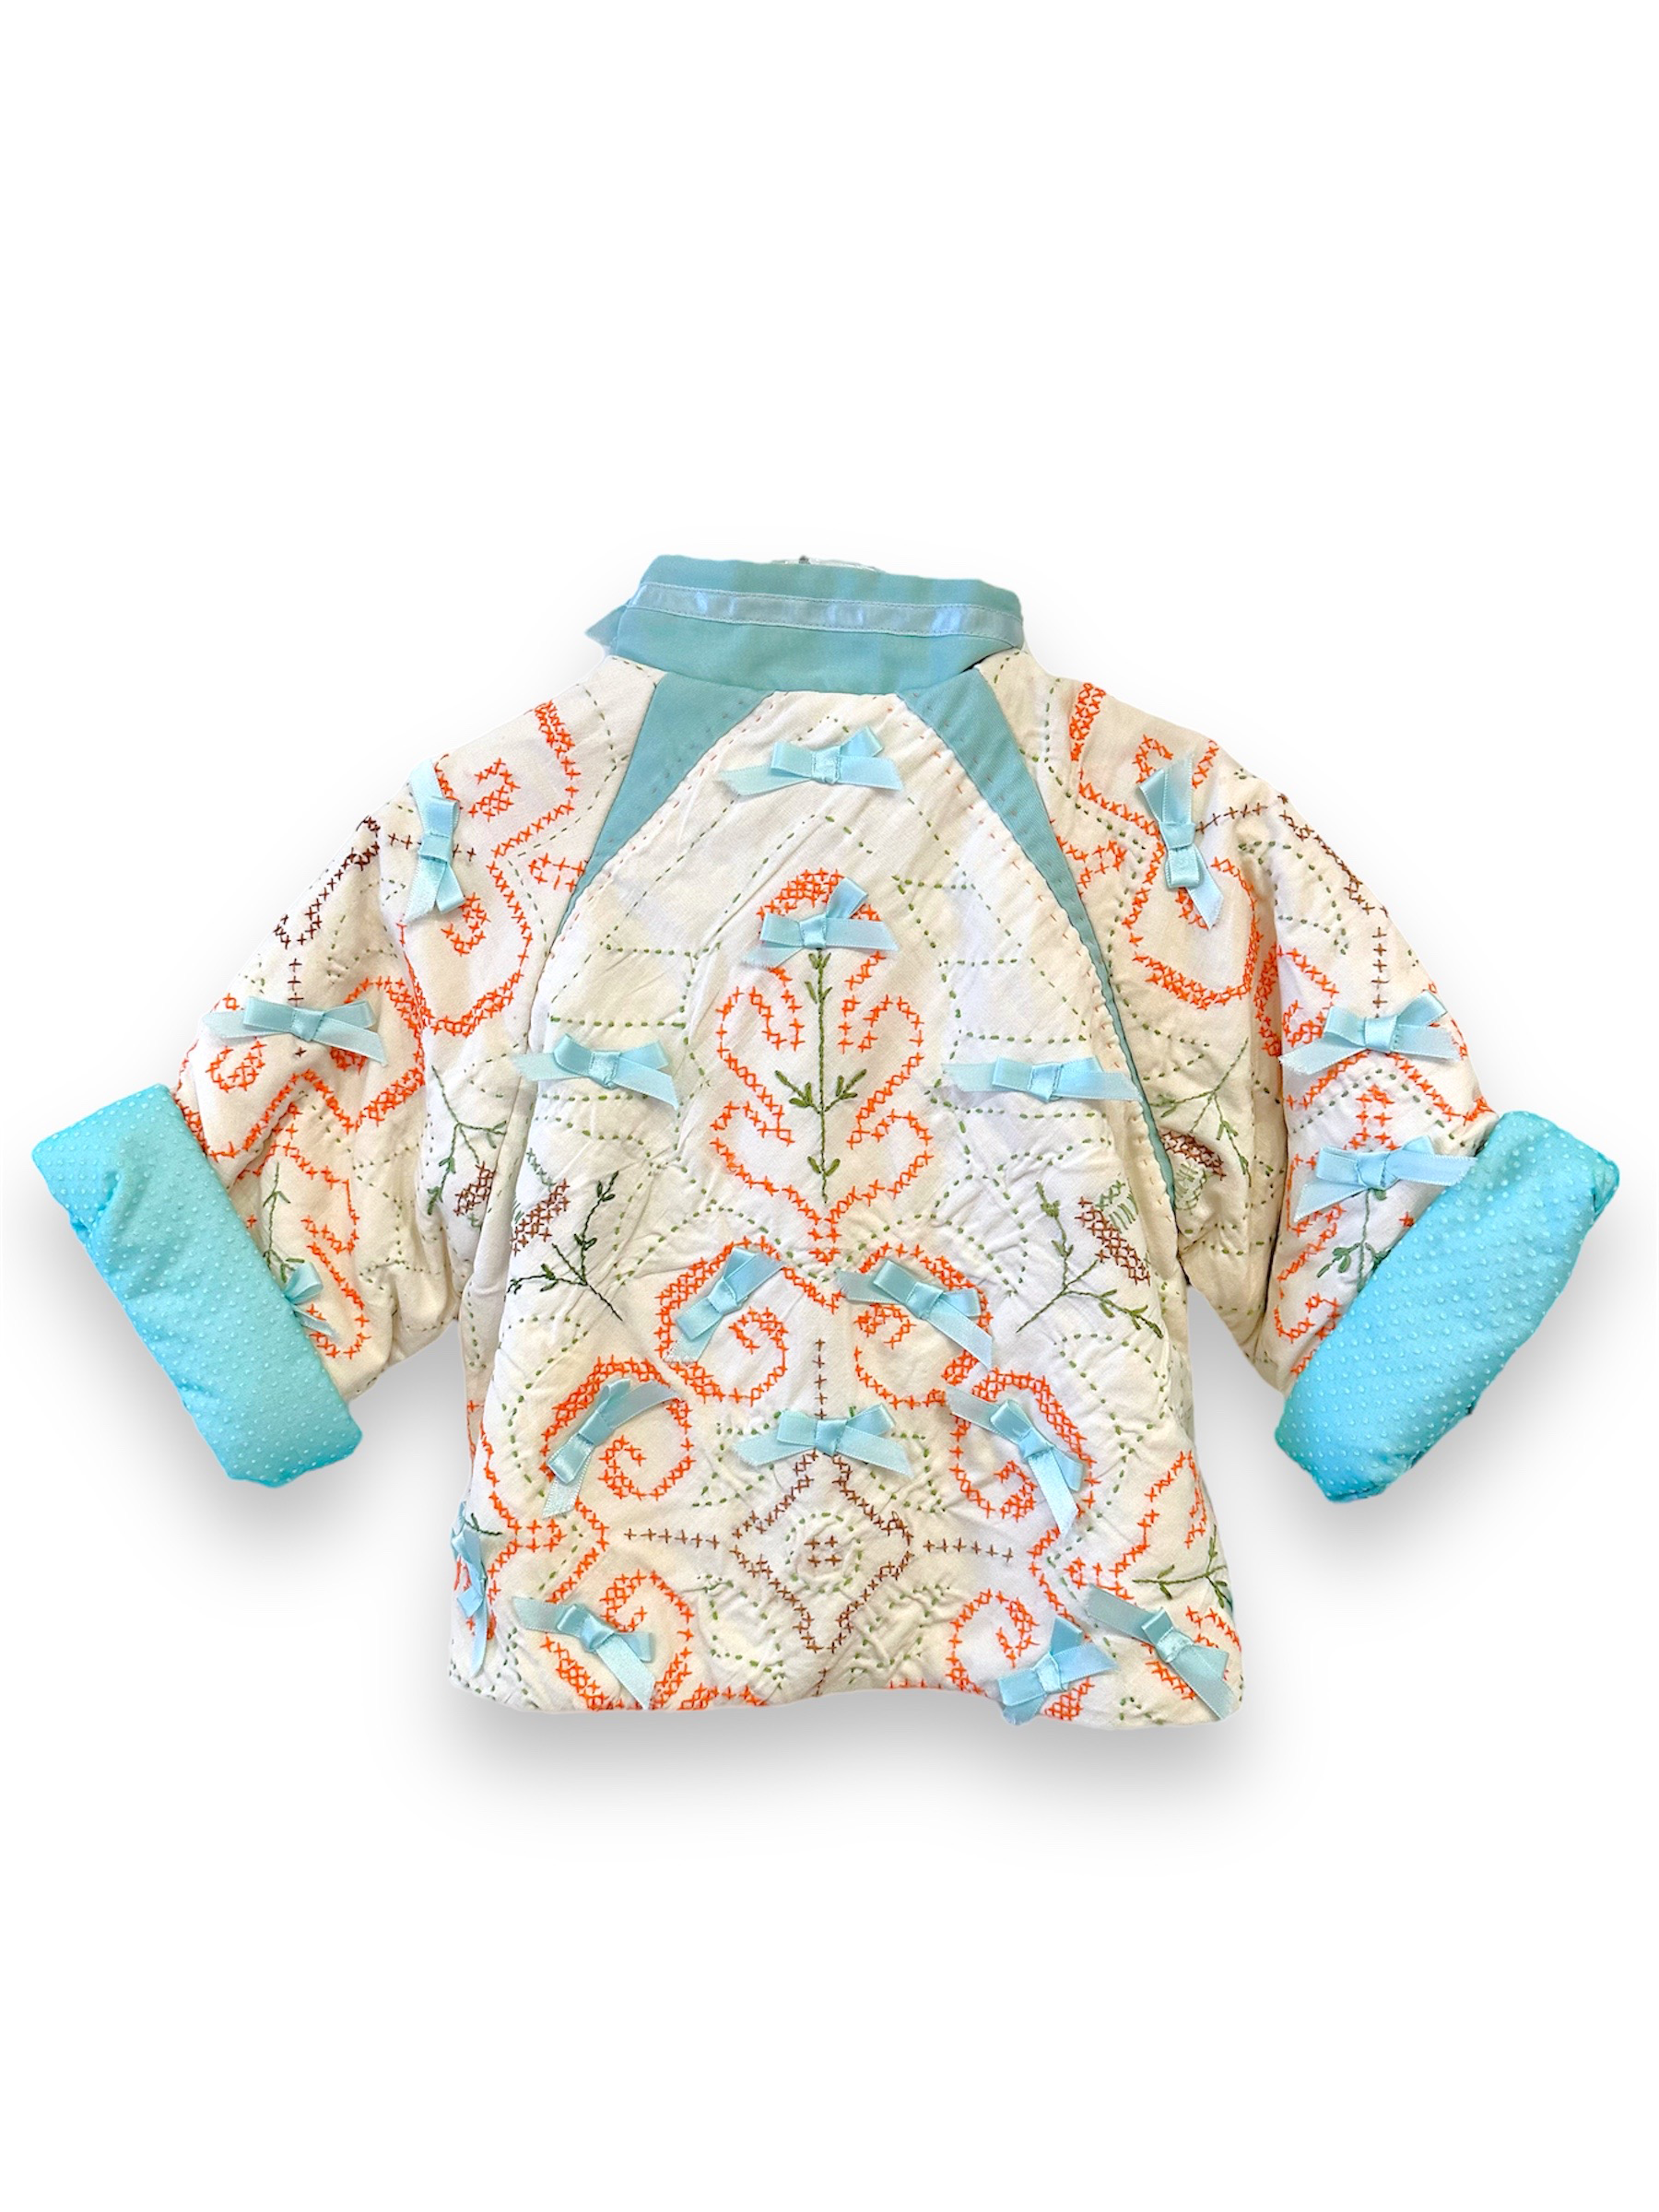 Vintage Valerie Byrnes 1984 Cross-Stitch Patchwork Jacket 18M